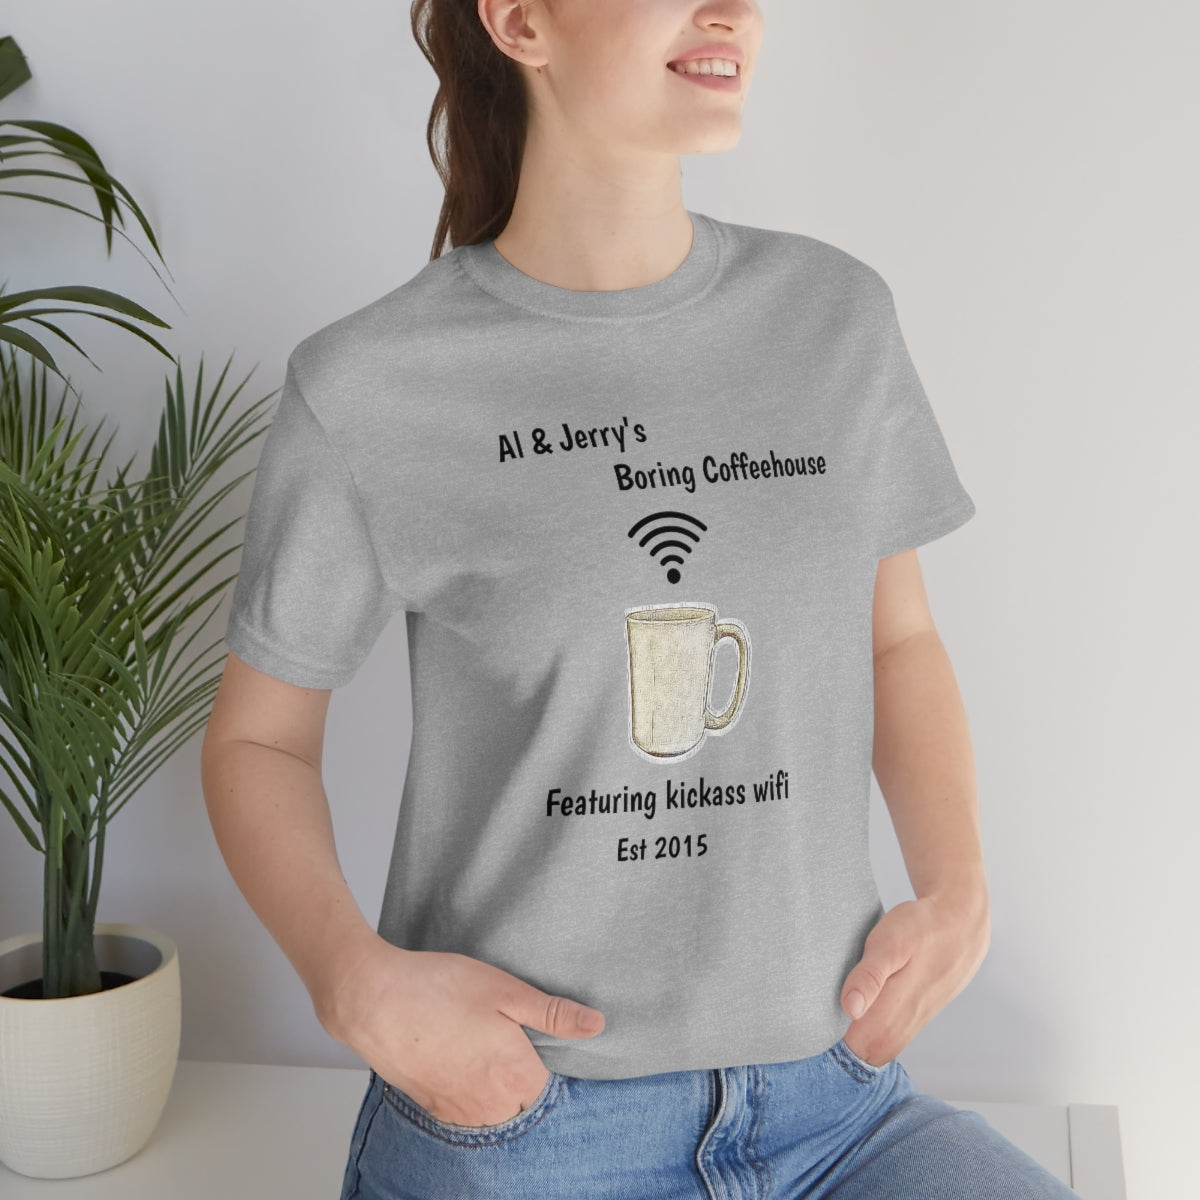 Al & Jerry "Boring Coffeehouse" Short Sleeve Tee